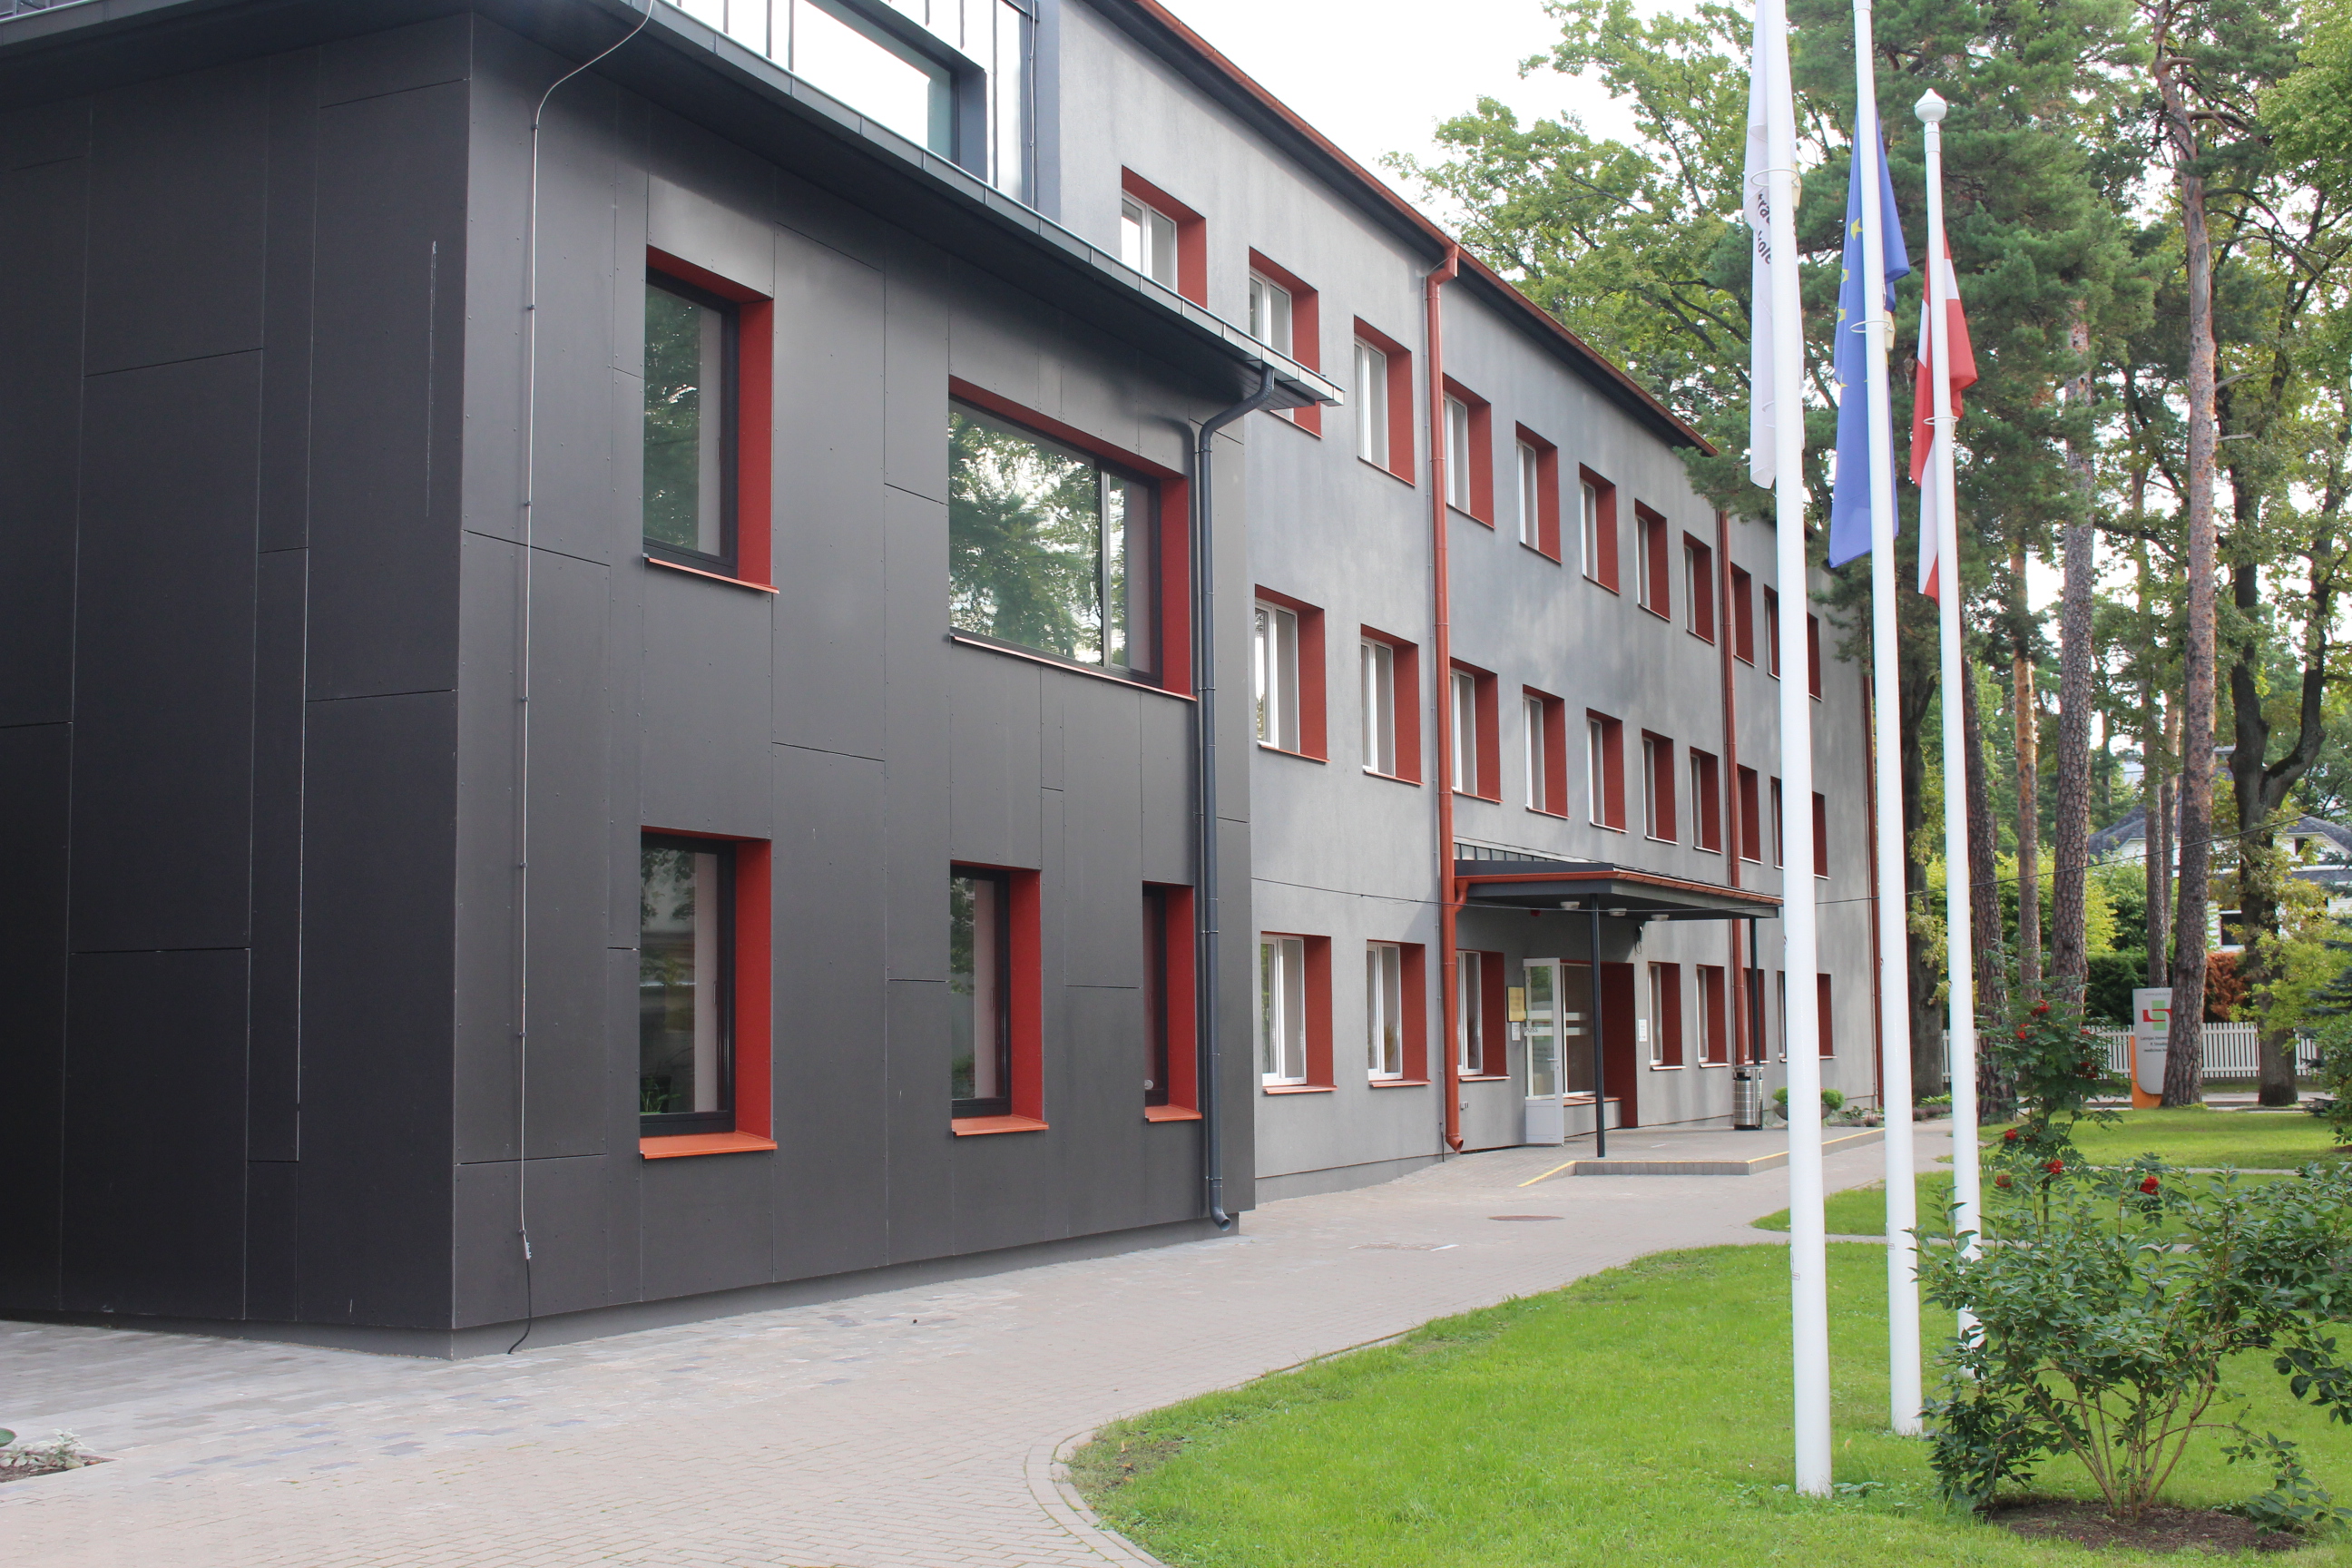 P. Stradins Medical College of the University of Latvia in Jūrmala city, Latvia – Vidus prospekts 38.